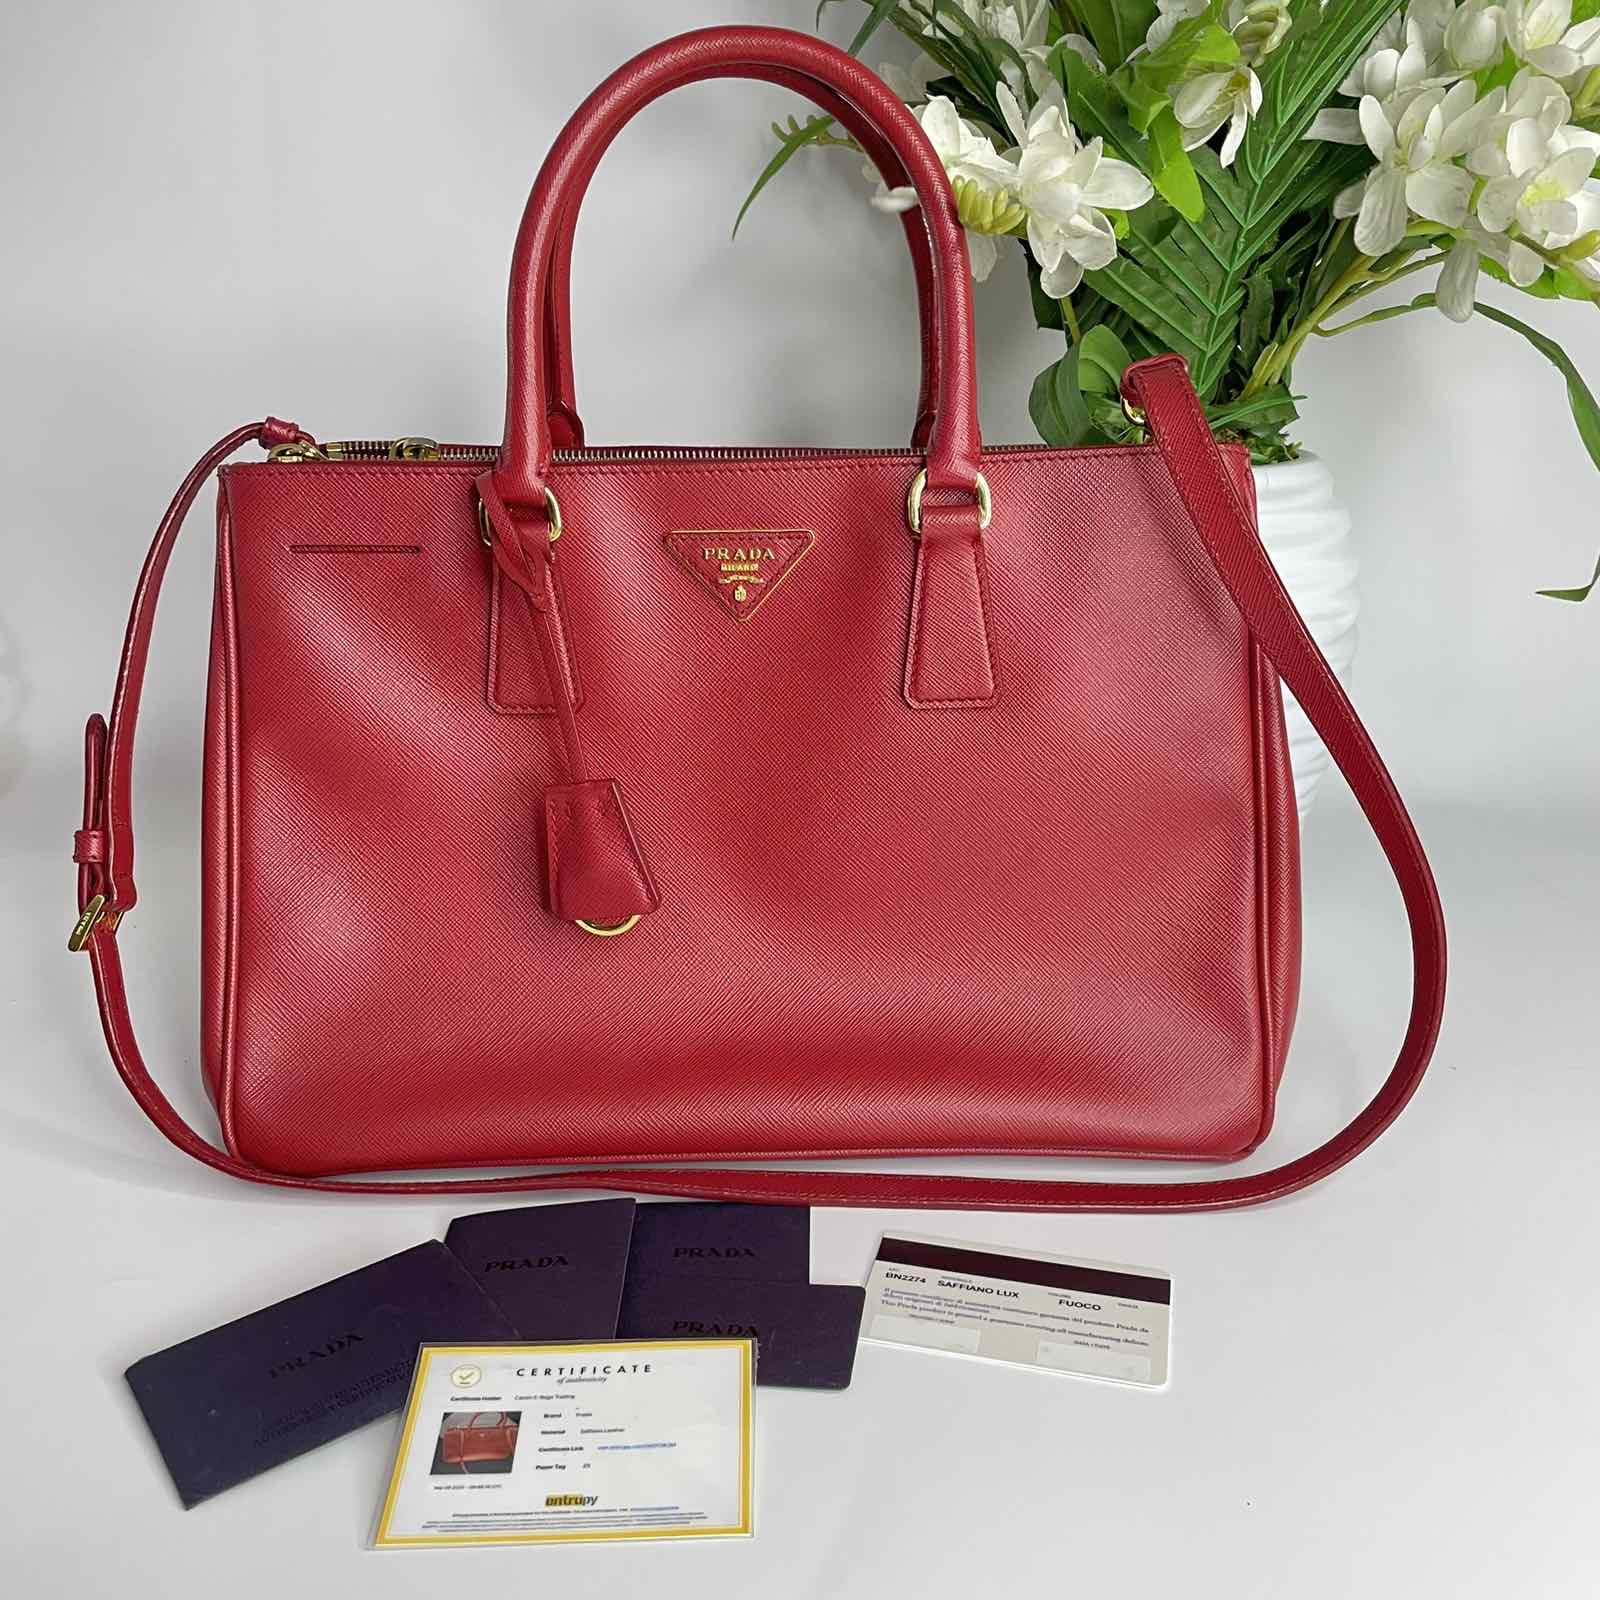 Prada Saffiano Lux Medium Promenade Bag in Fuoco/Red (Model No